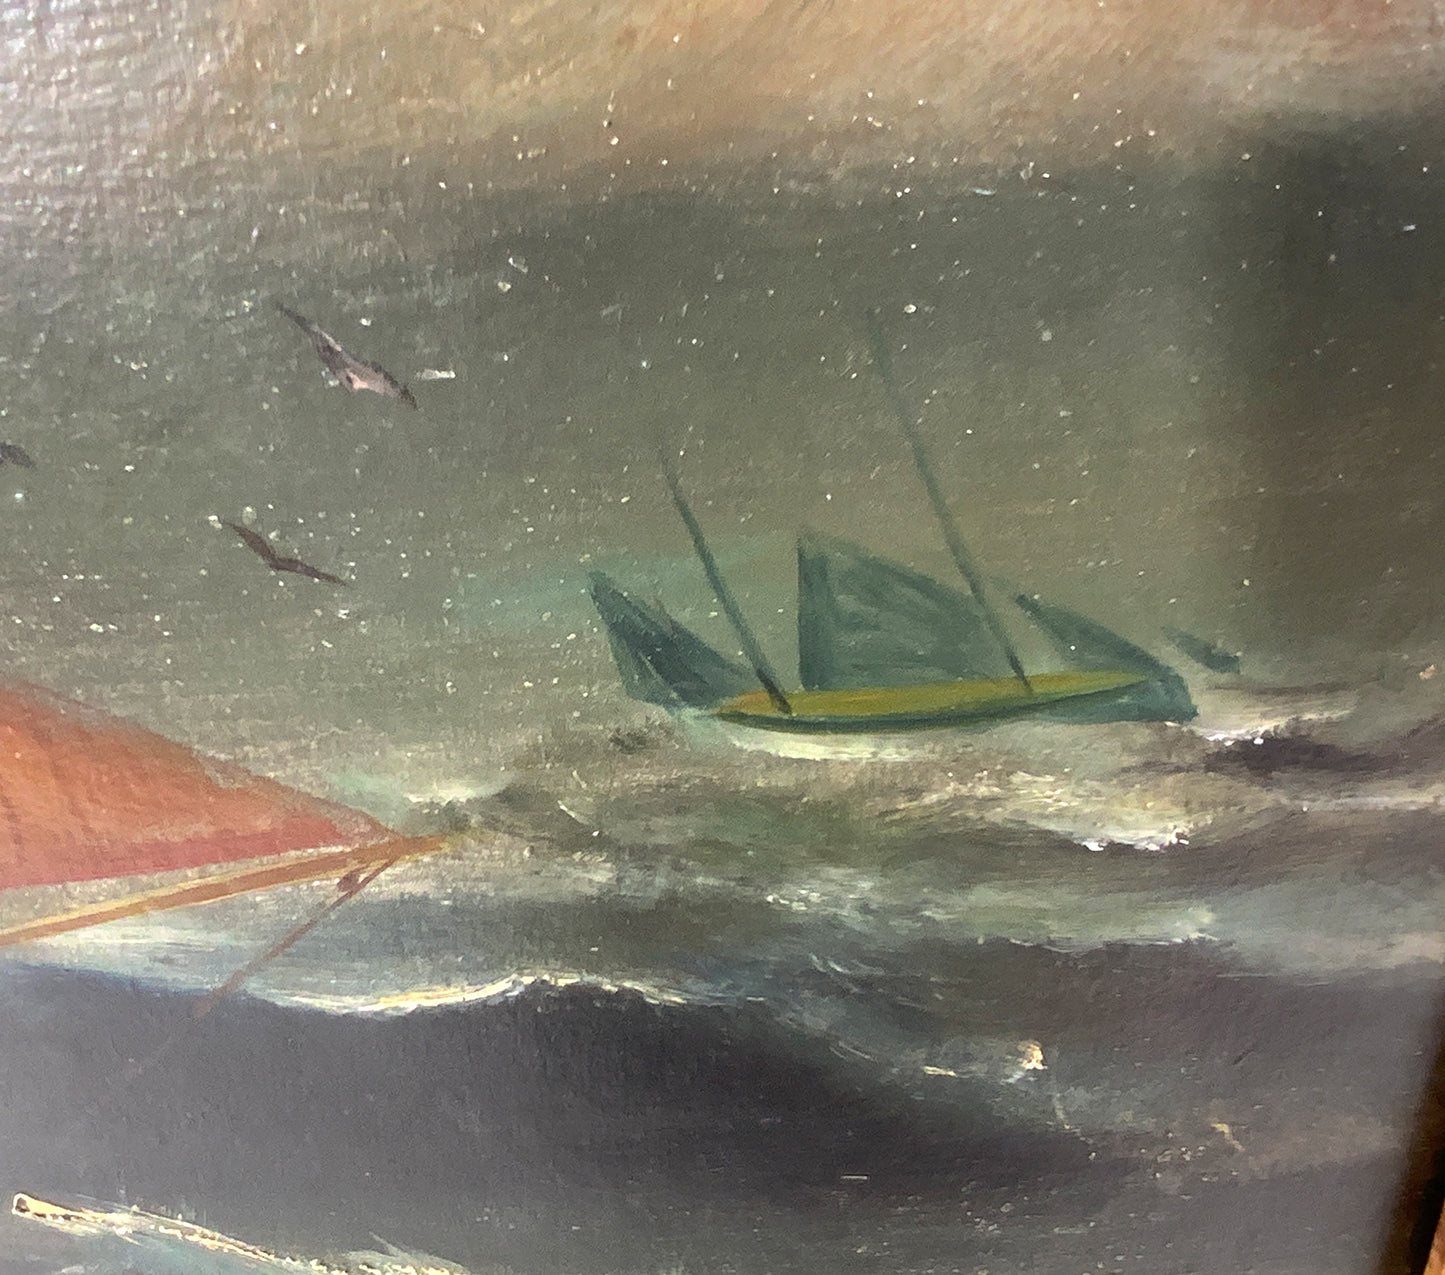 Painting Of An English Fishing Trawler - Lannan Gallery